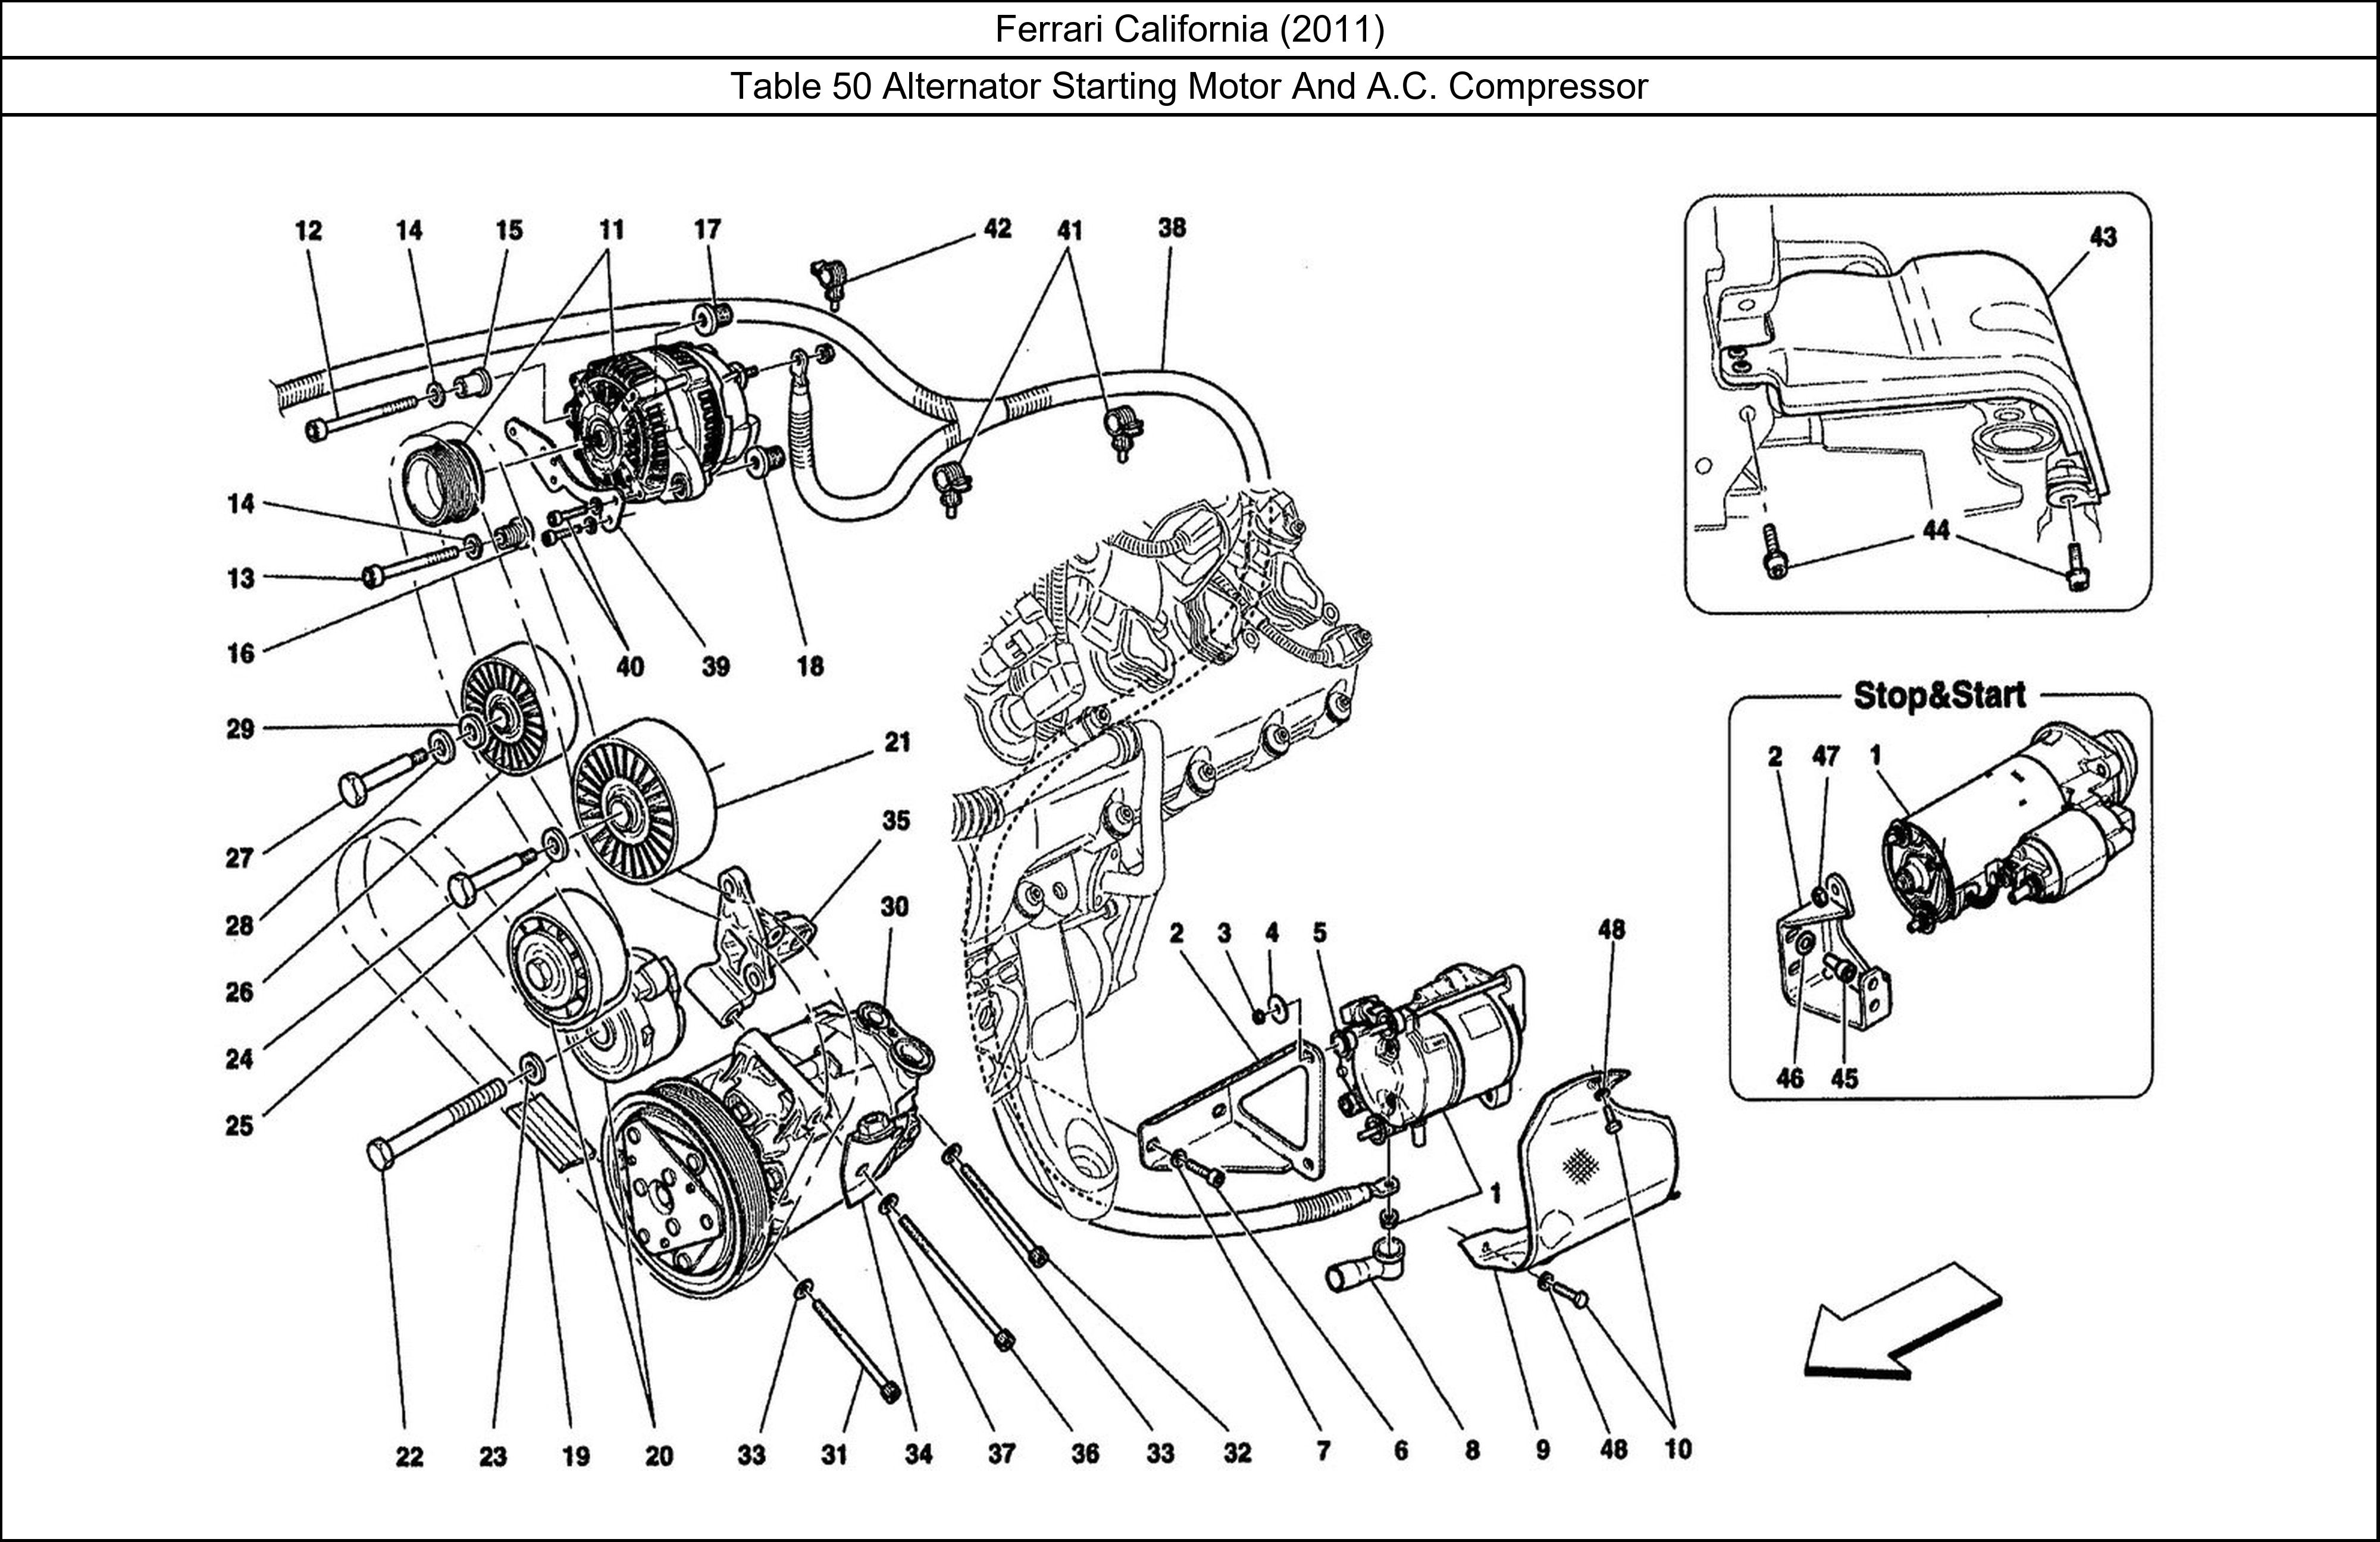 Ferrari Parts Ferrari California (2011) Table 50 Alternator Starting Motor And A.C. Compressor